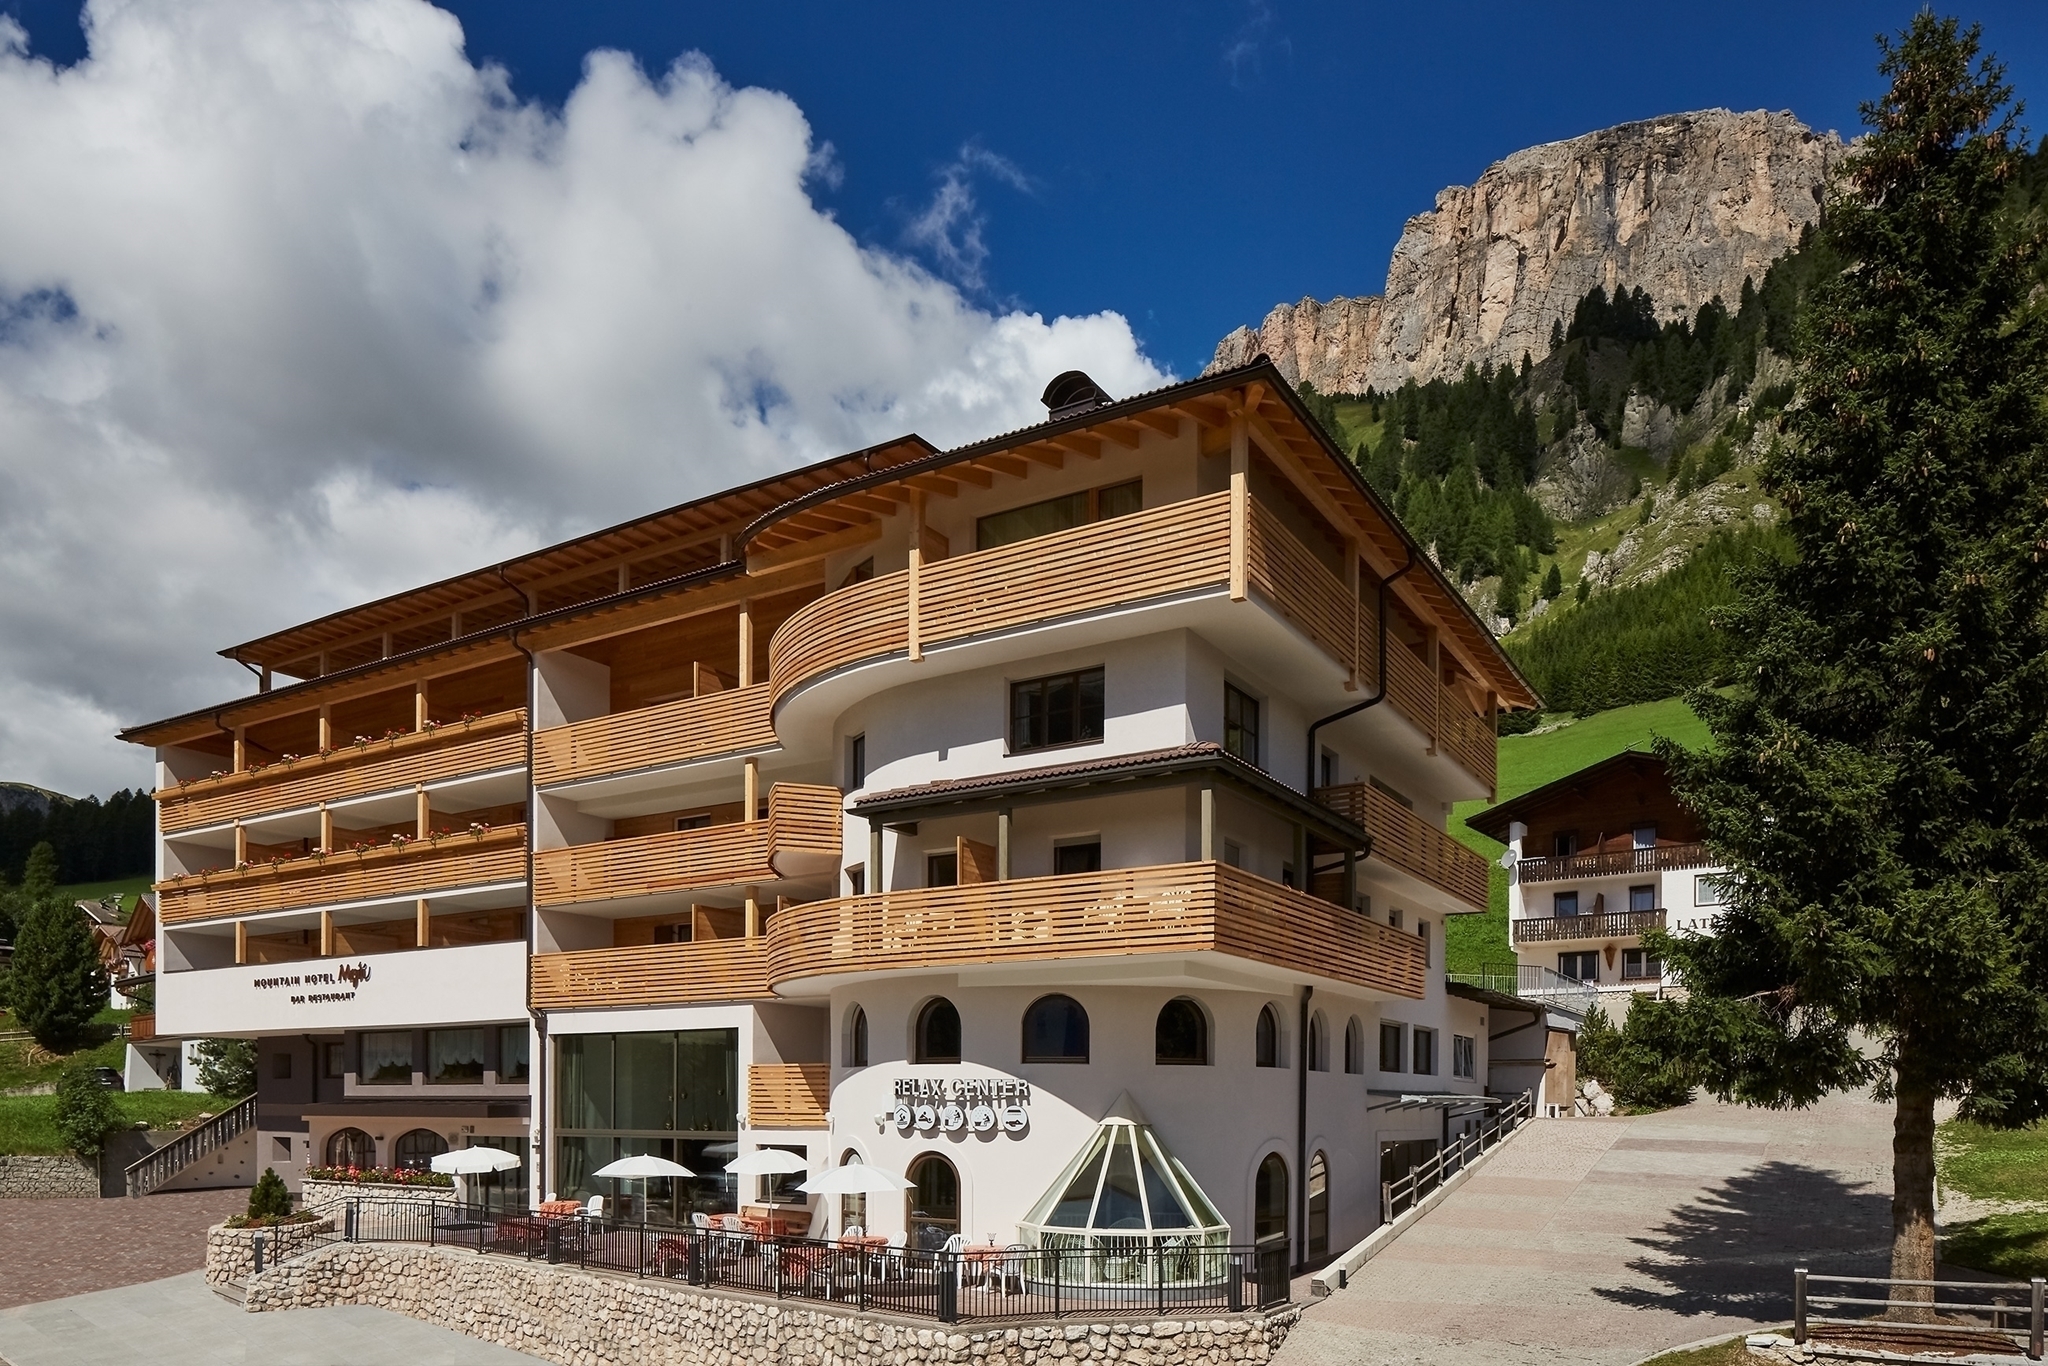 Mountain Hotel Mezdì - Colfosco in Alta Badia